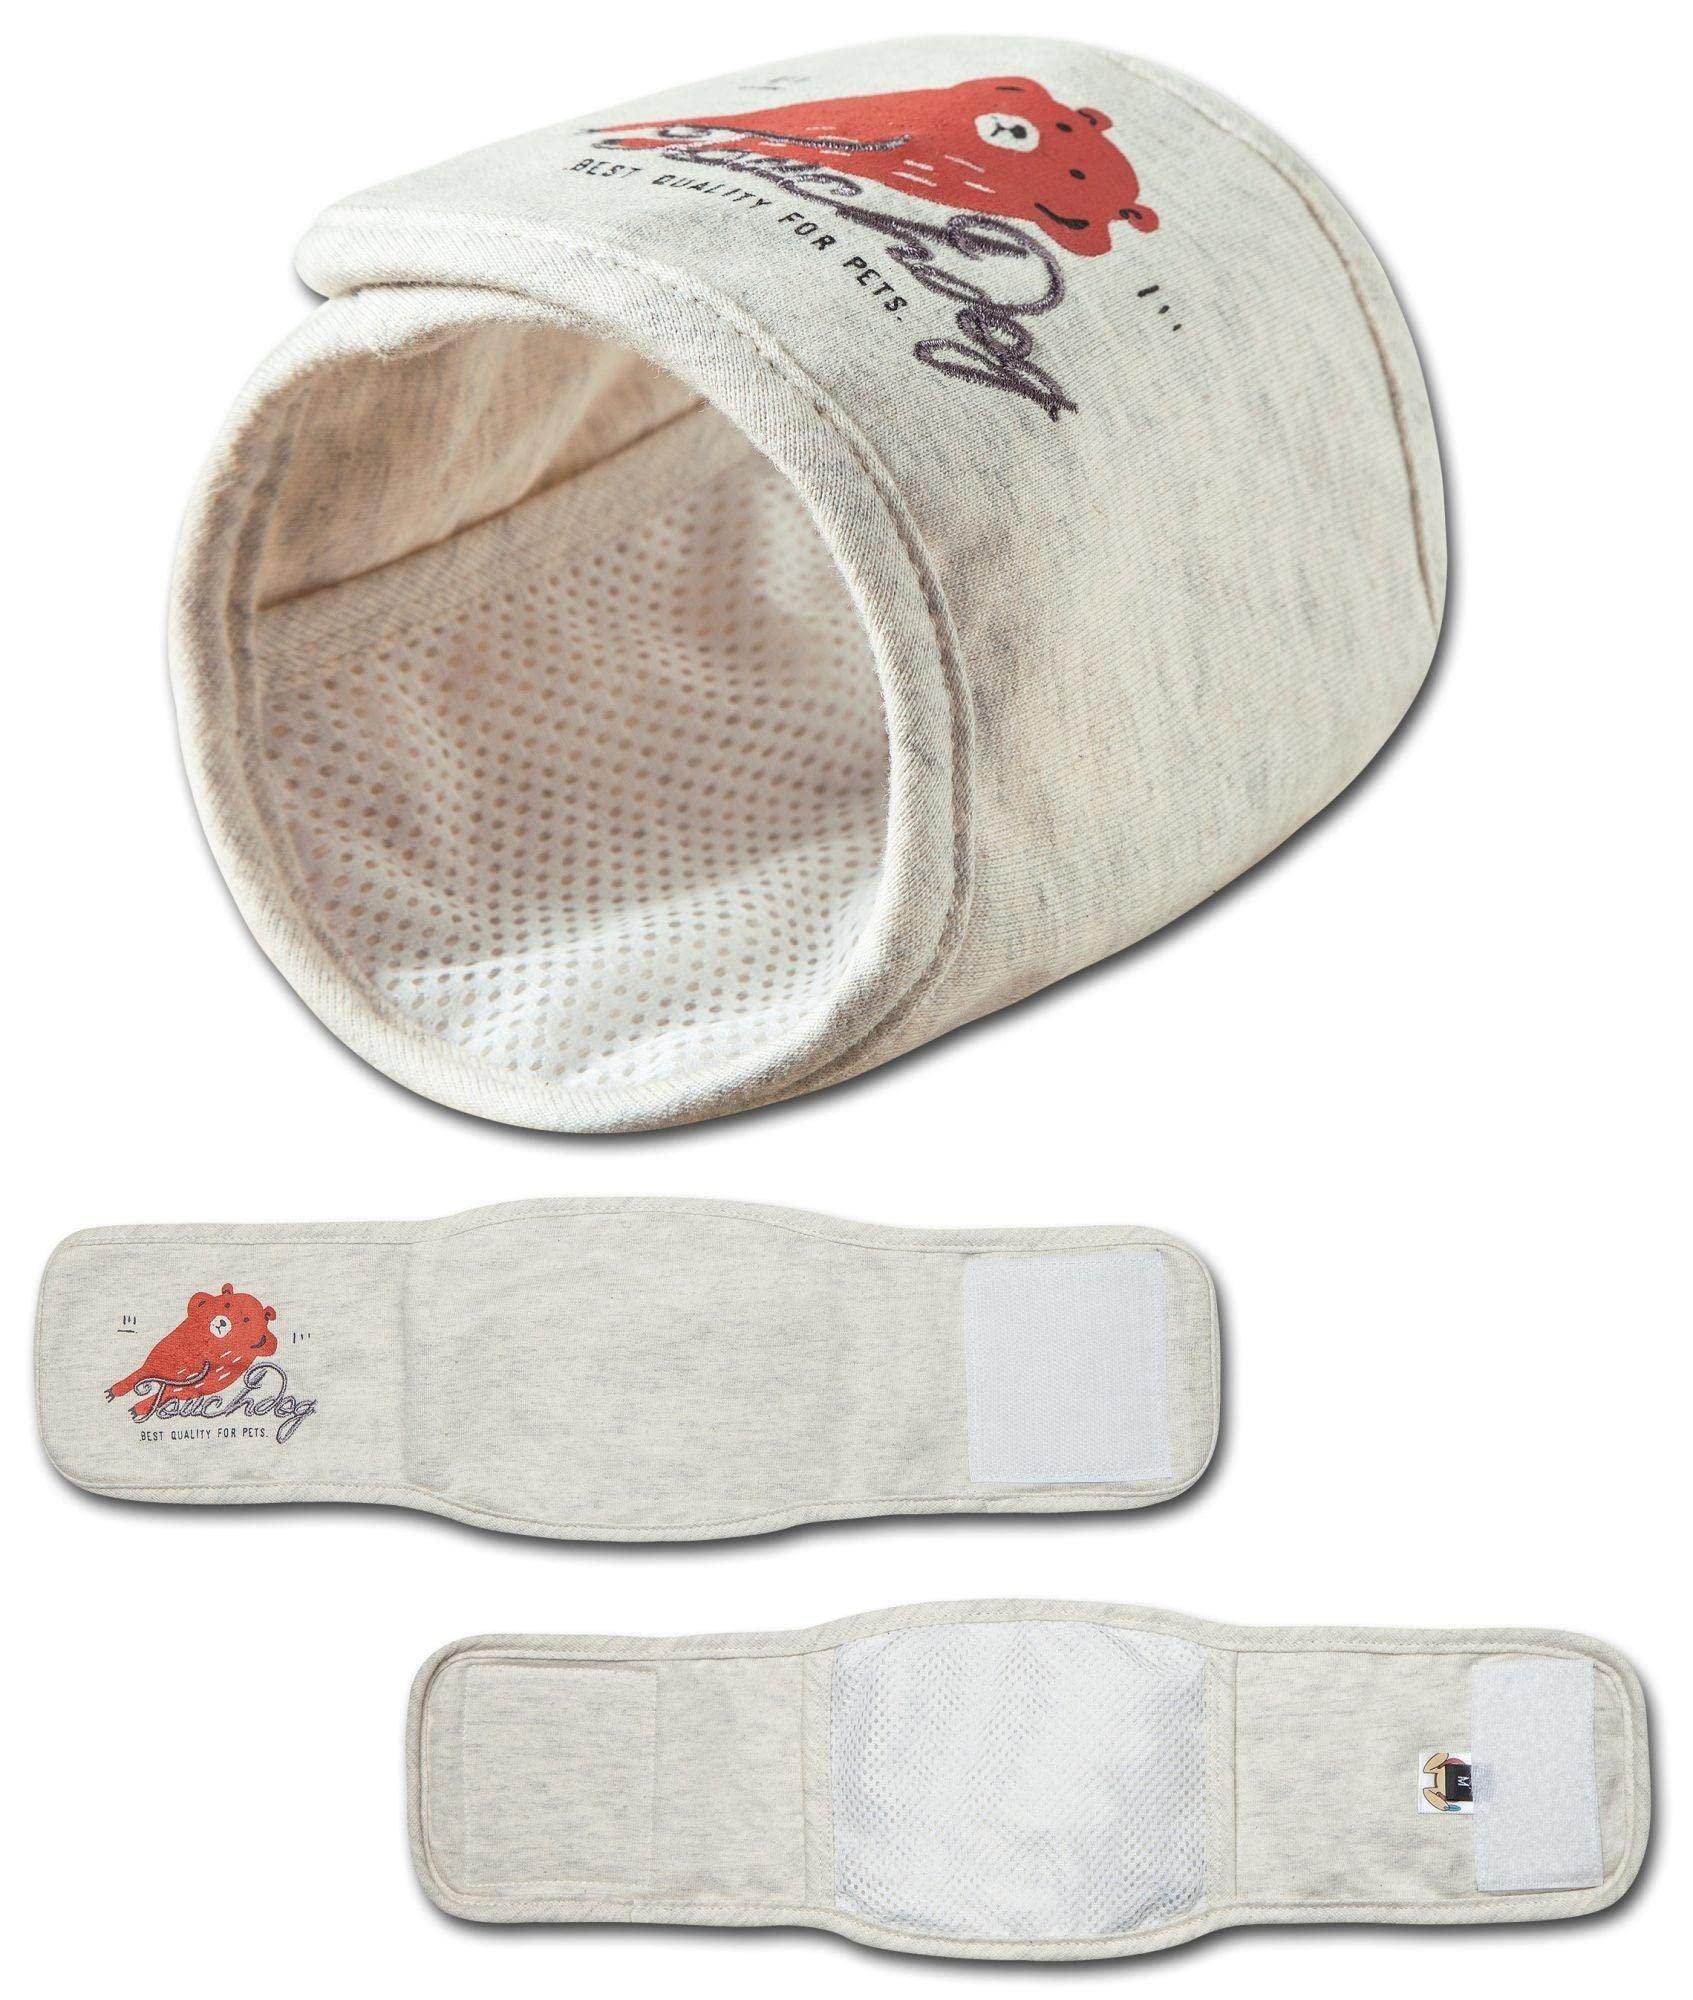 Touchdog Gauze-Aid Protective Dog Bandage and Calming Compression Sleeve, Large, White